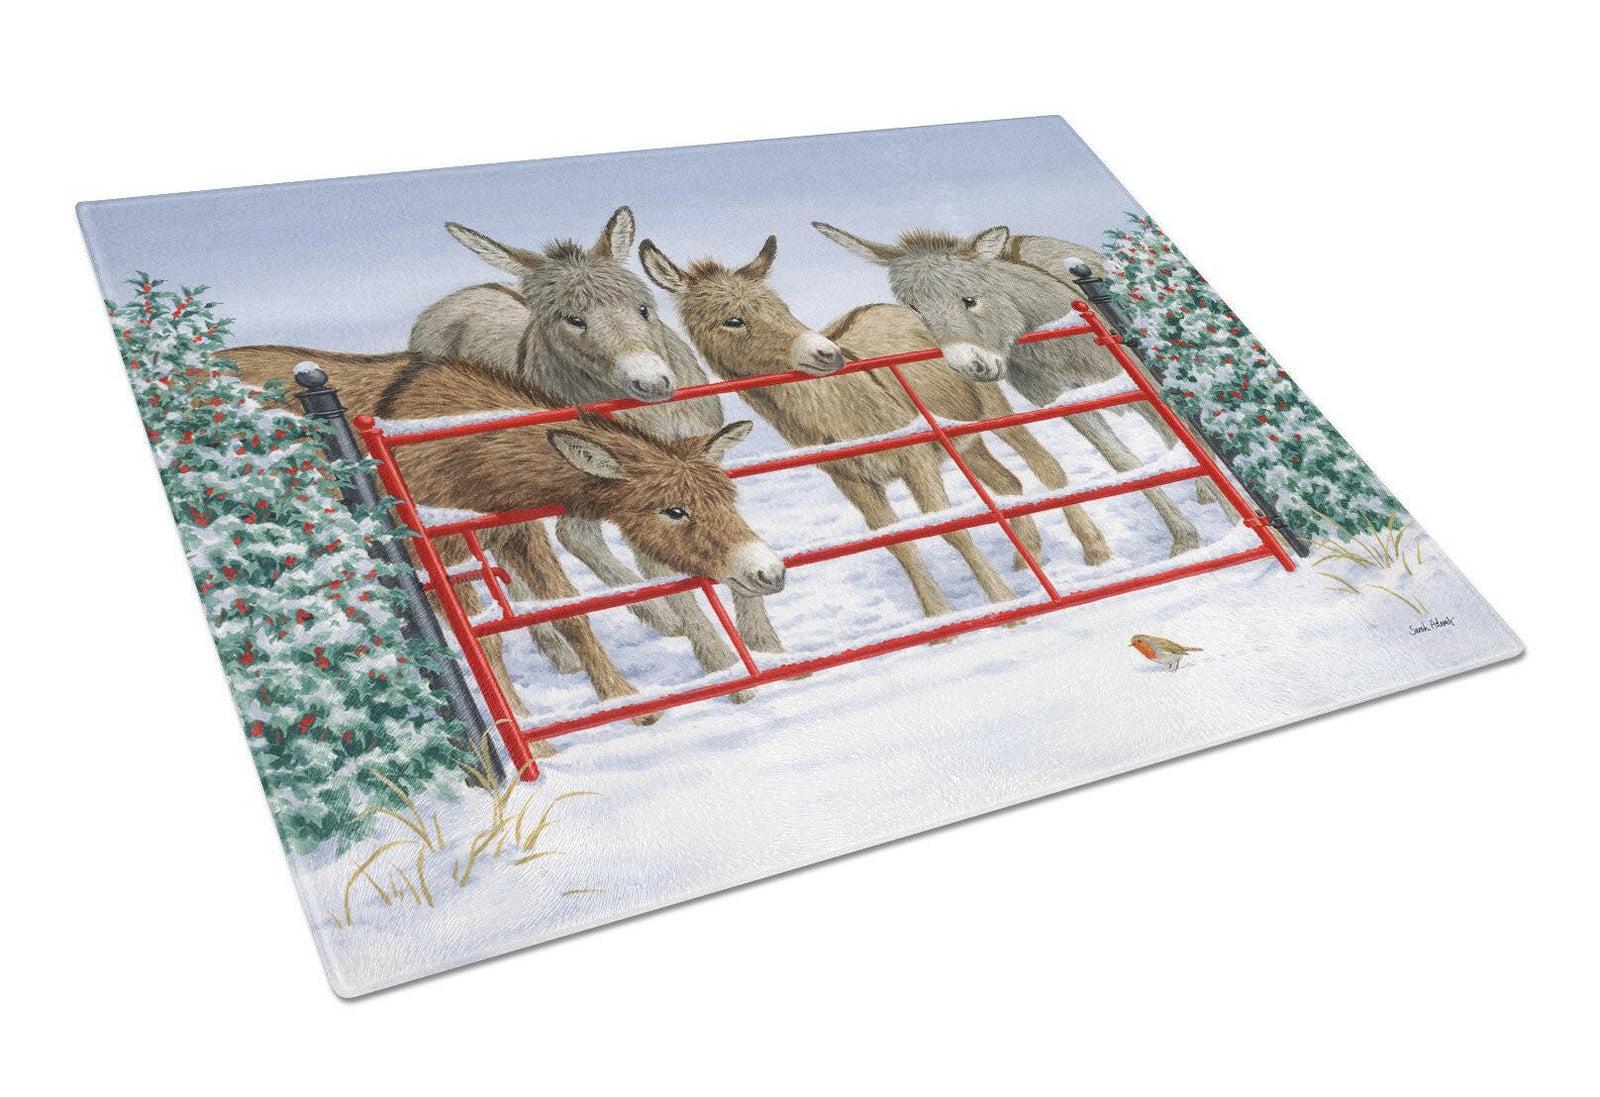 Donkeys and Robin Glass Cutting Board Large ASA2198LCB by Caroline's Treasures